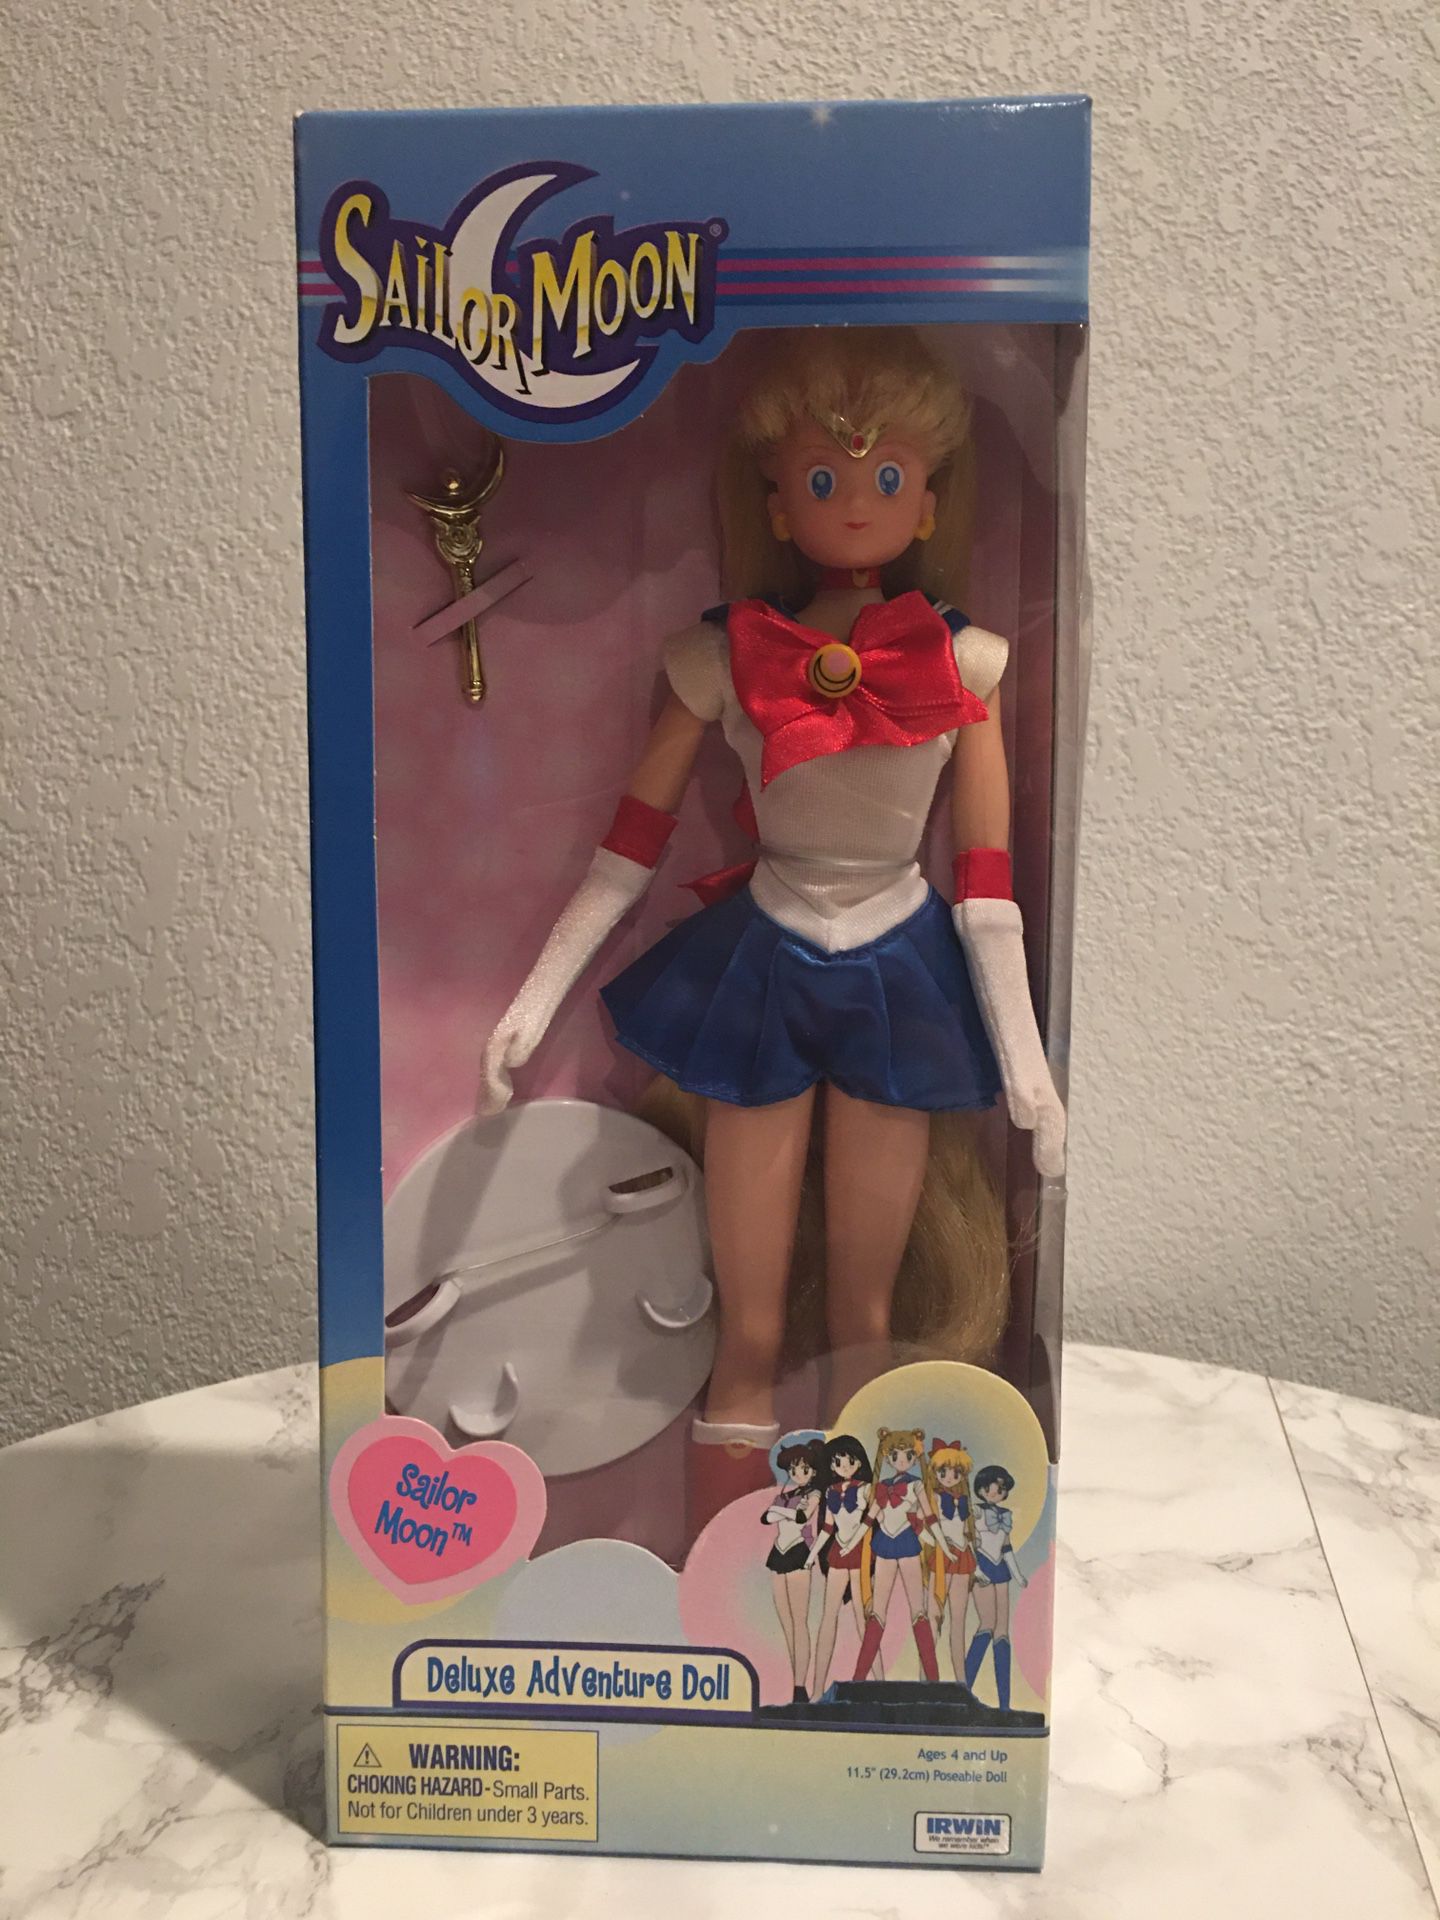 Sailor Moon Doll by Irwin, NIB